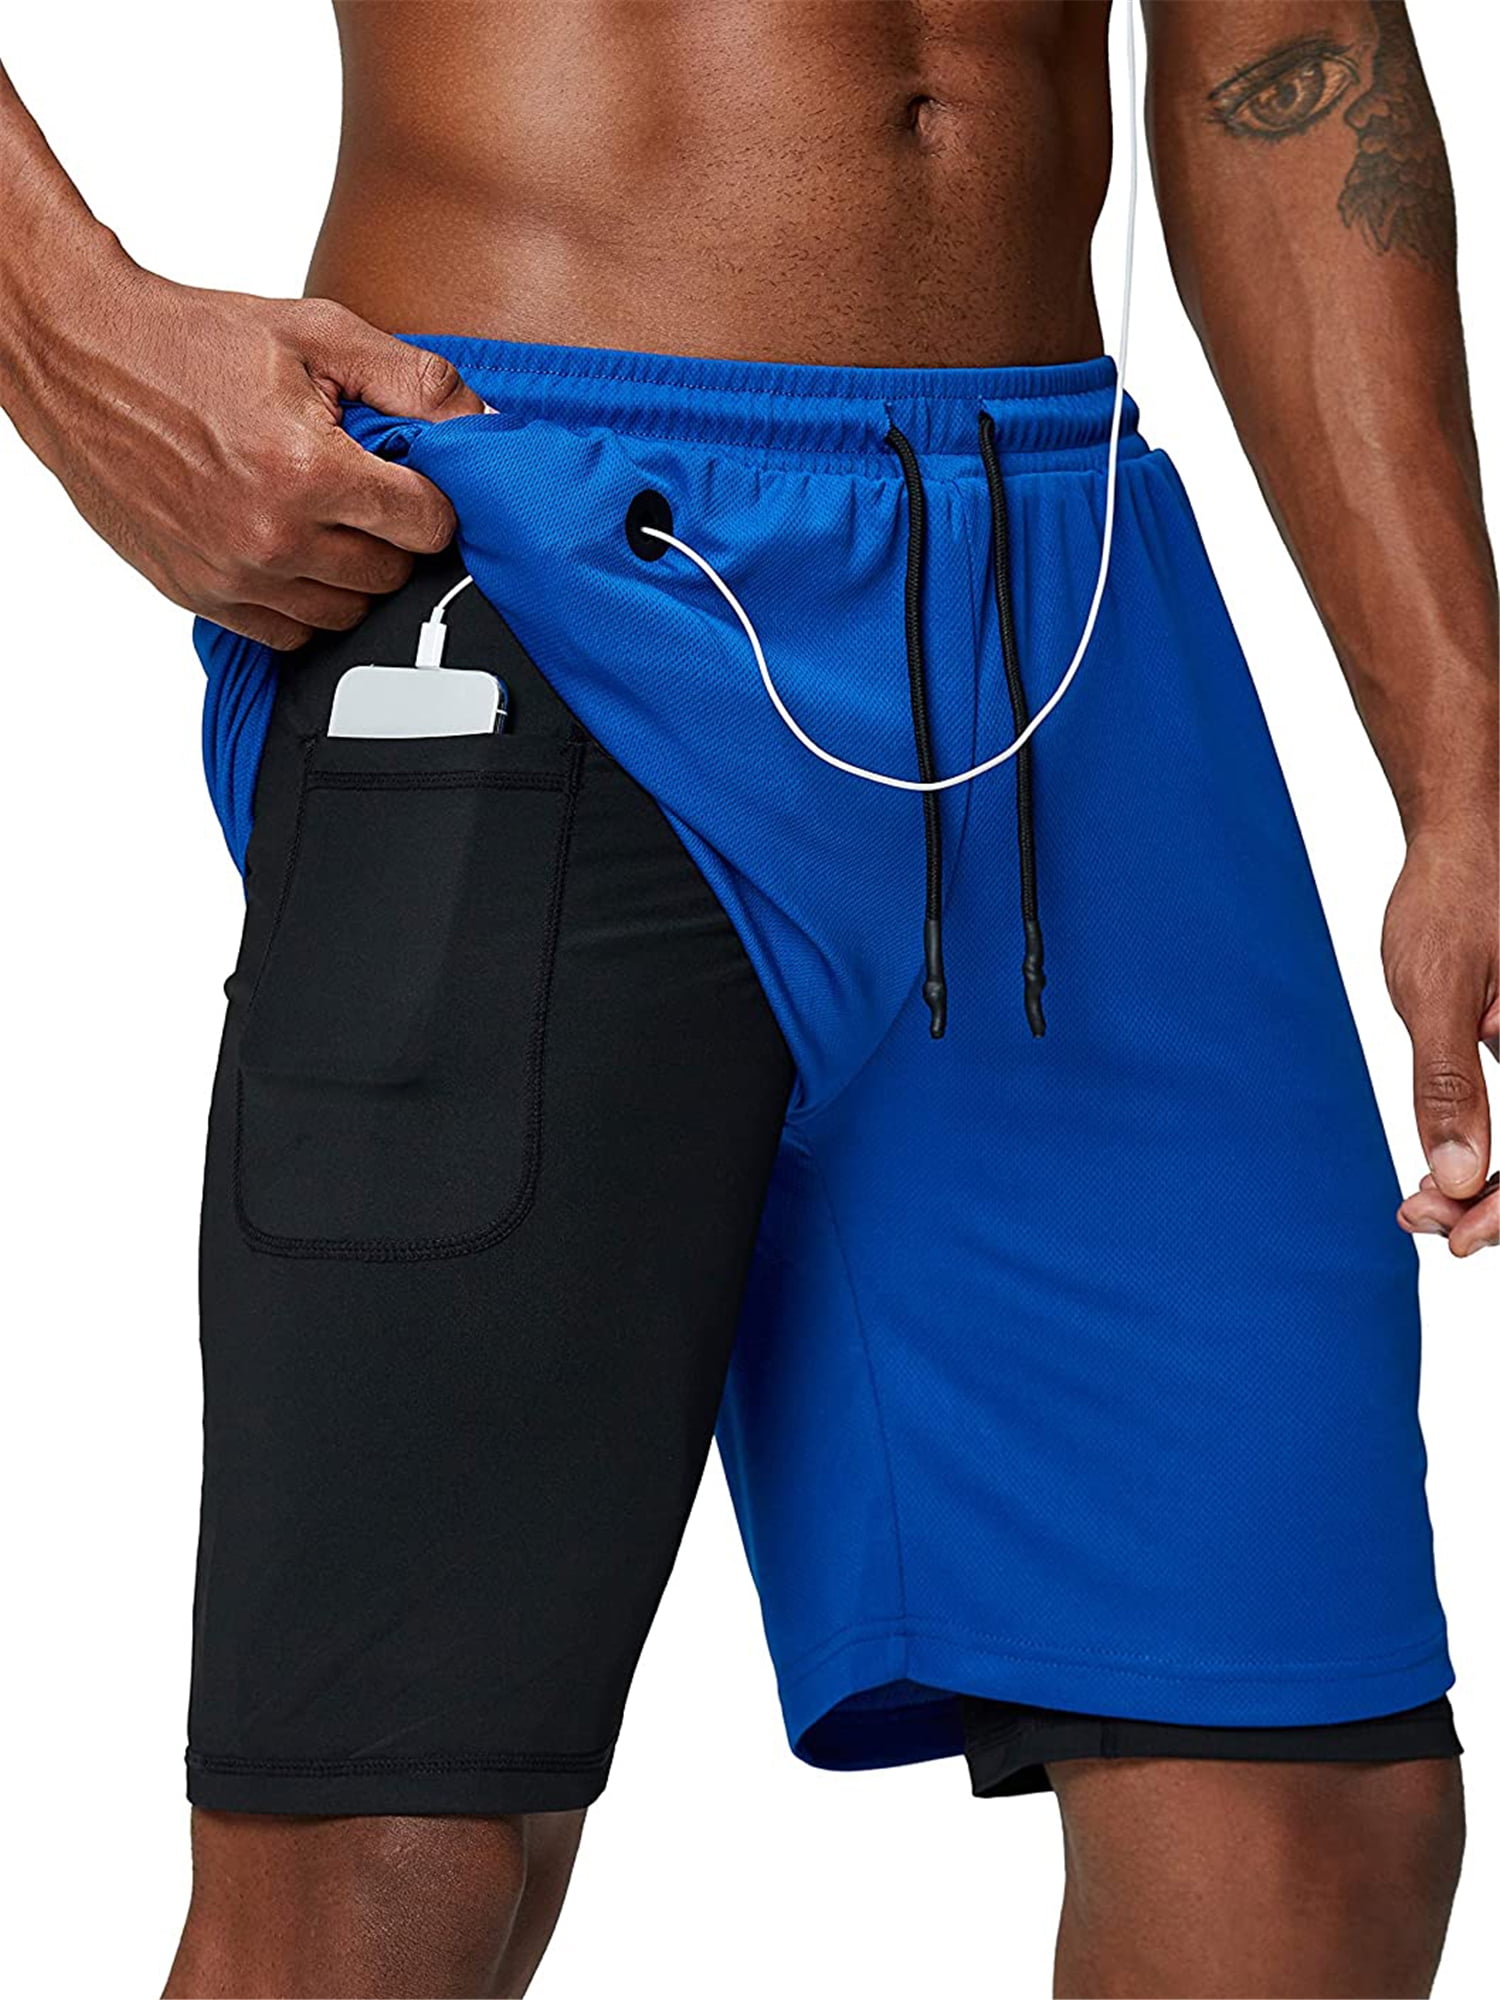 men's compression shorts with phone pocket door